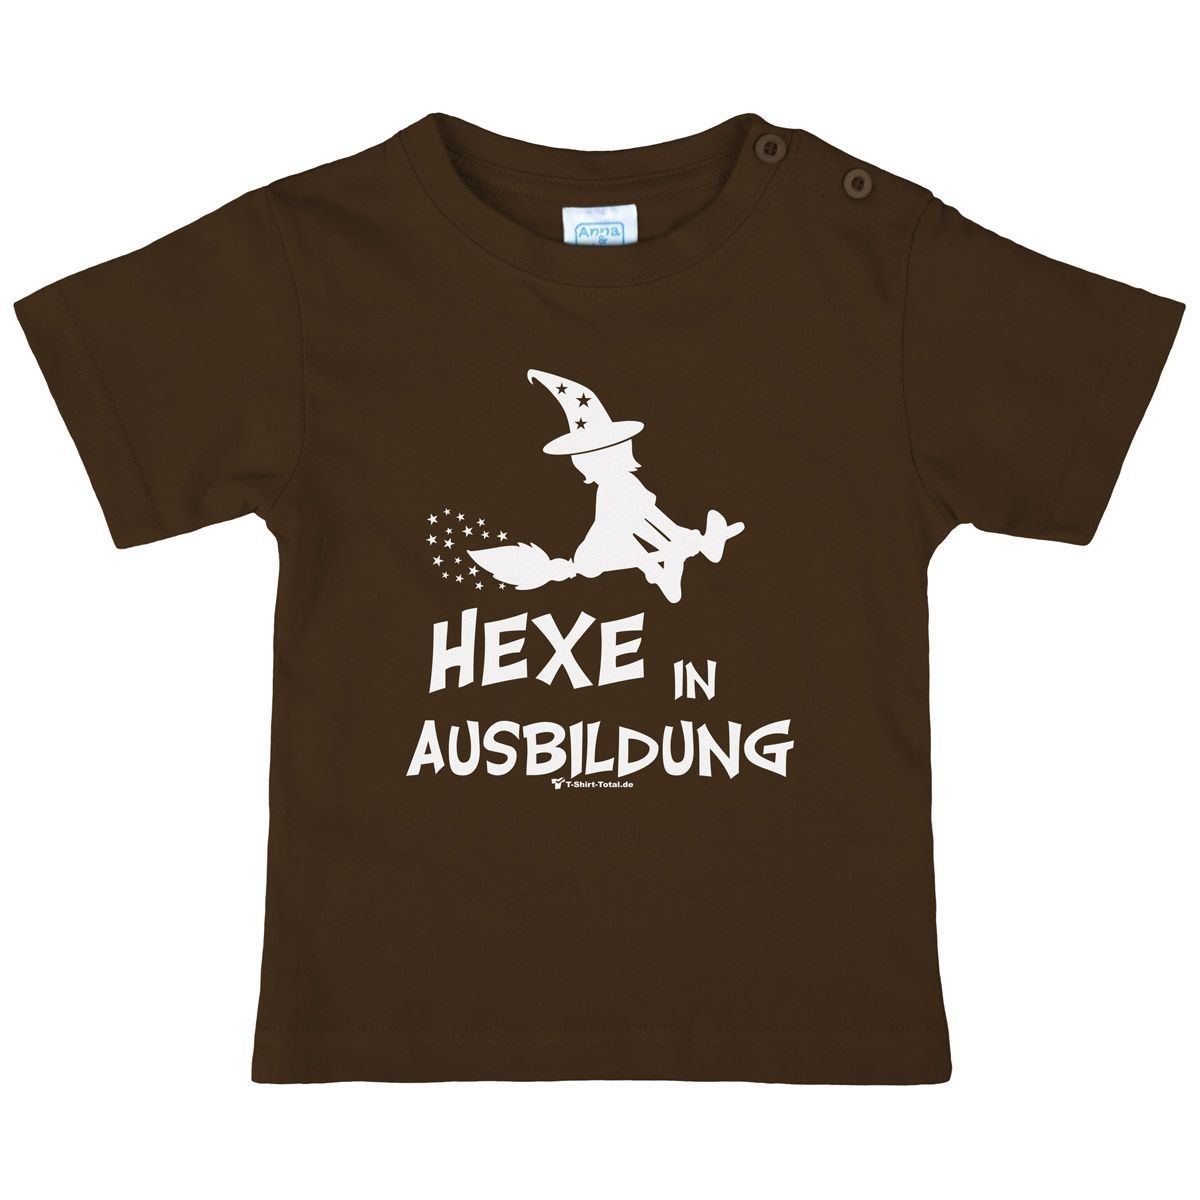 Hexe in Ausbildung Kinder T-Shirt braun 80 / 86